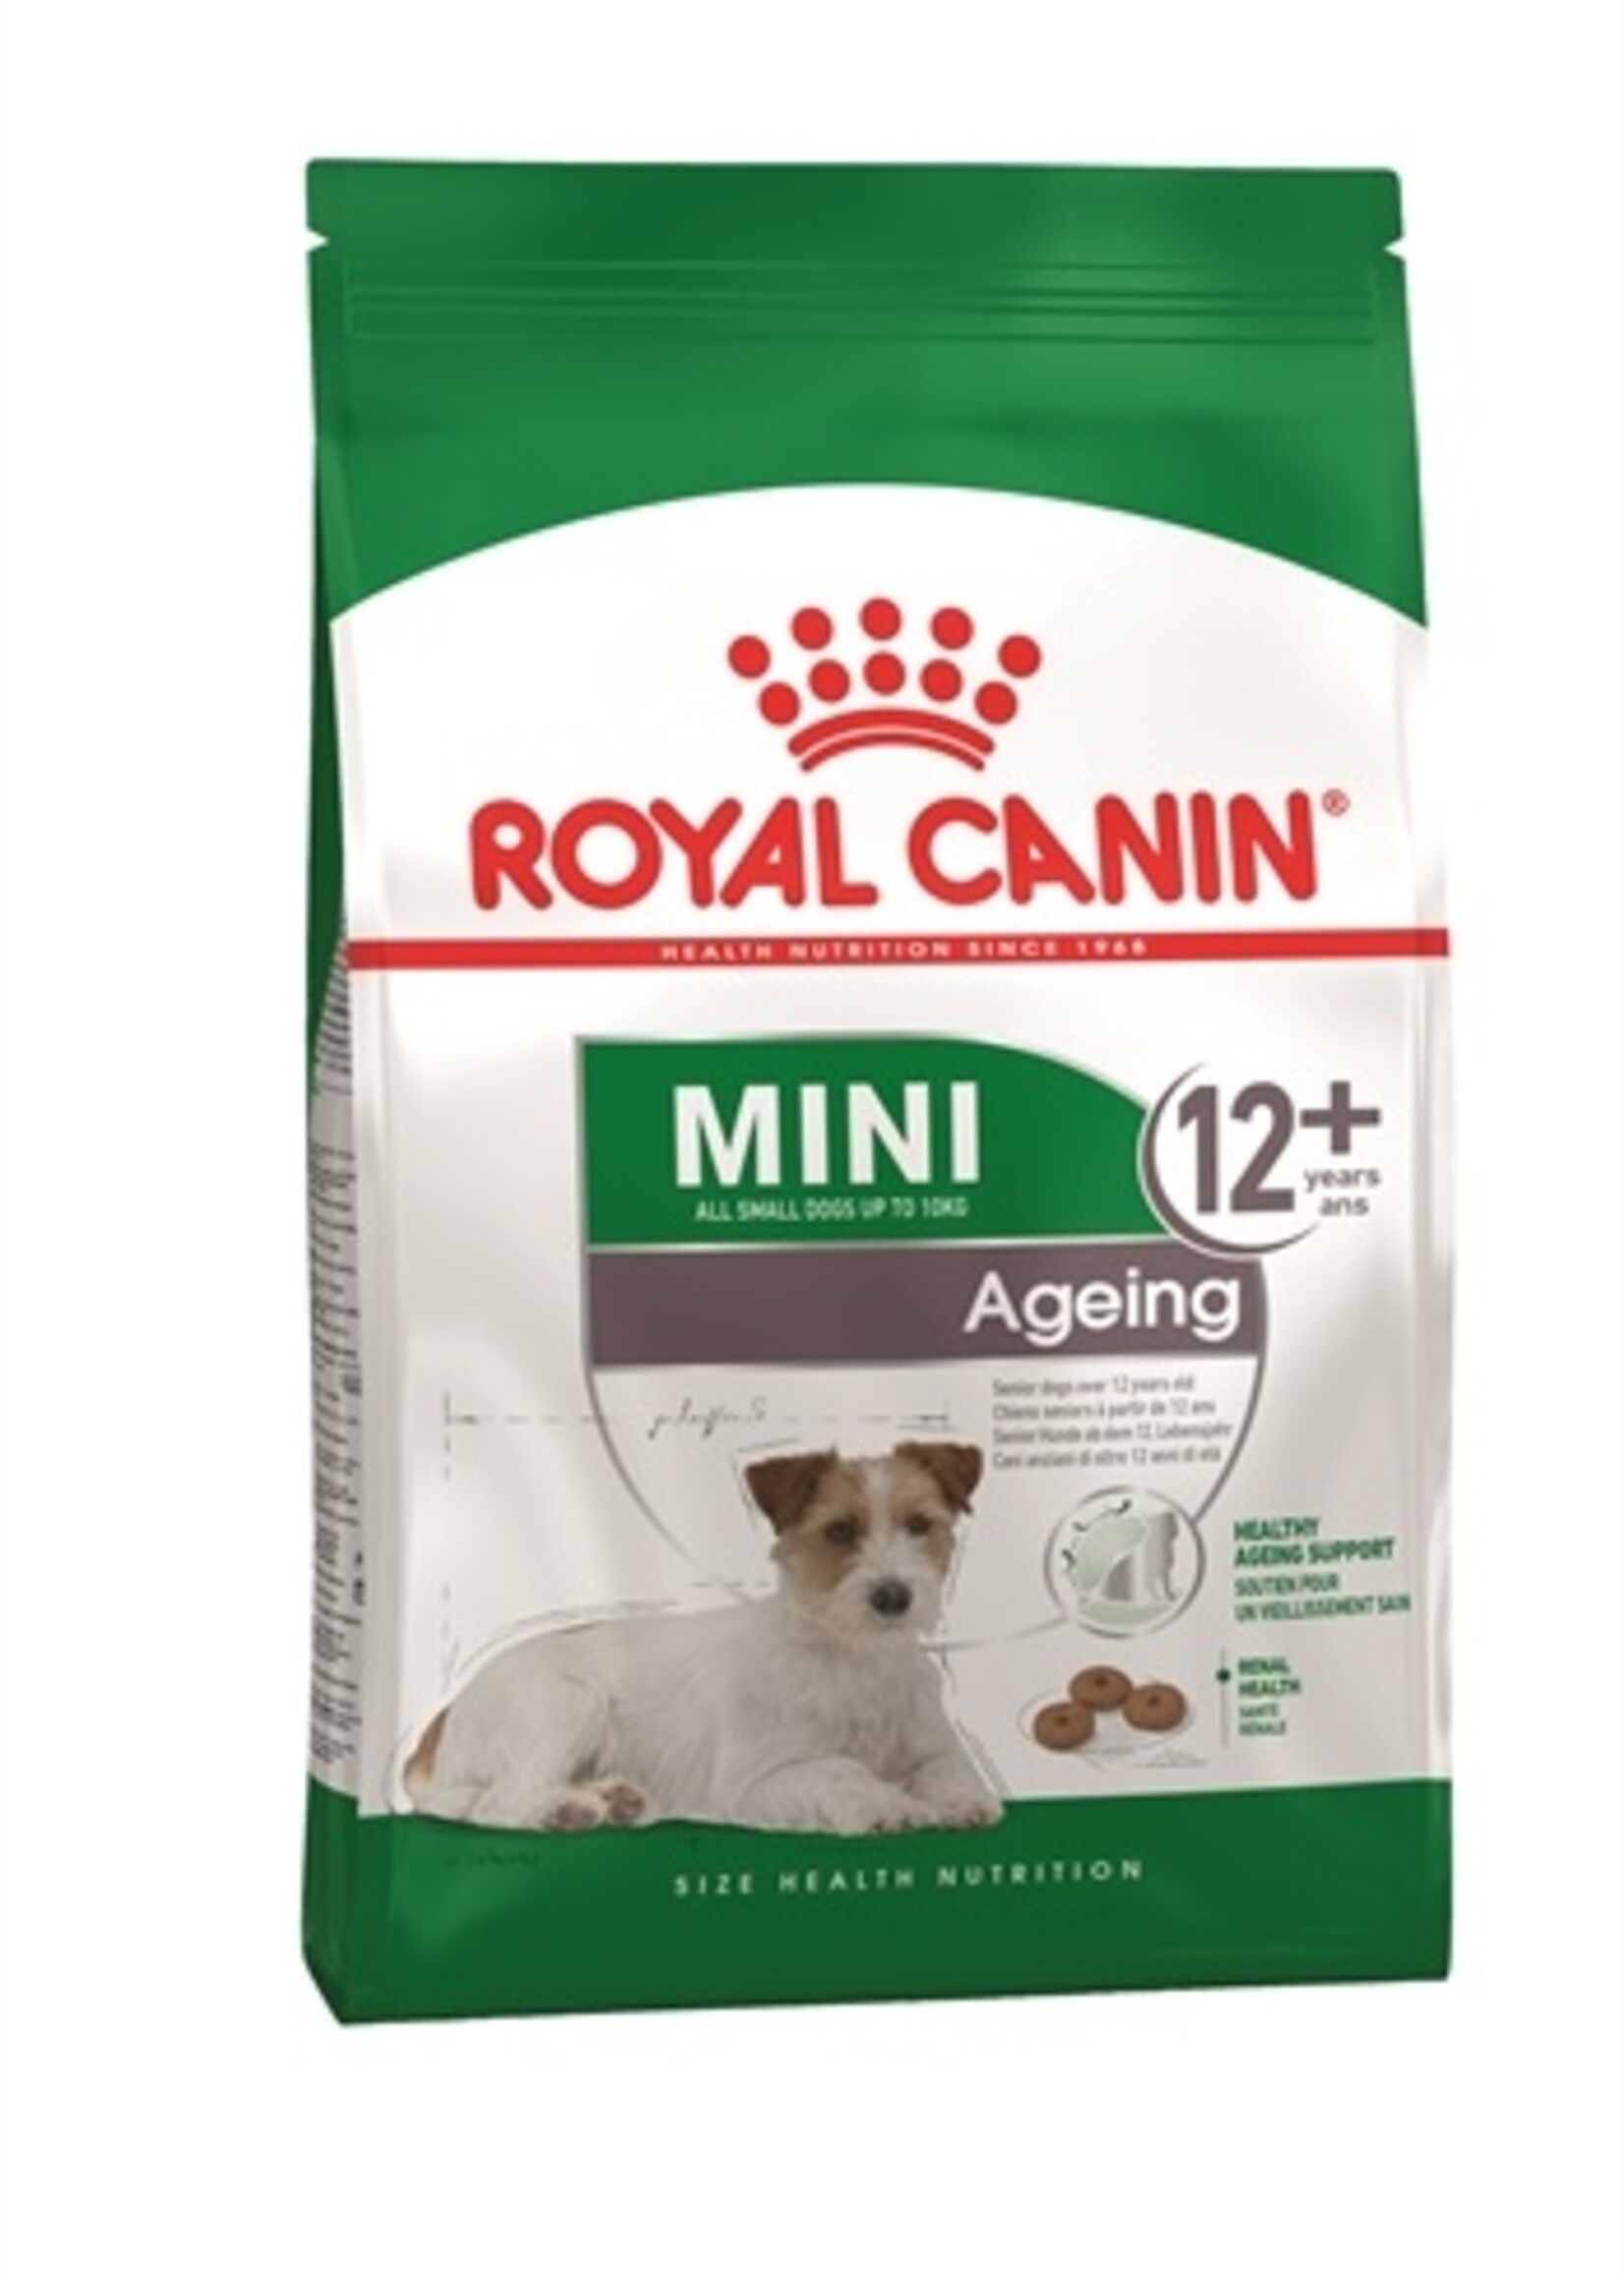 Royal canin Royal canin mini ageing +12